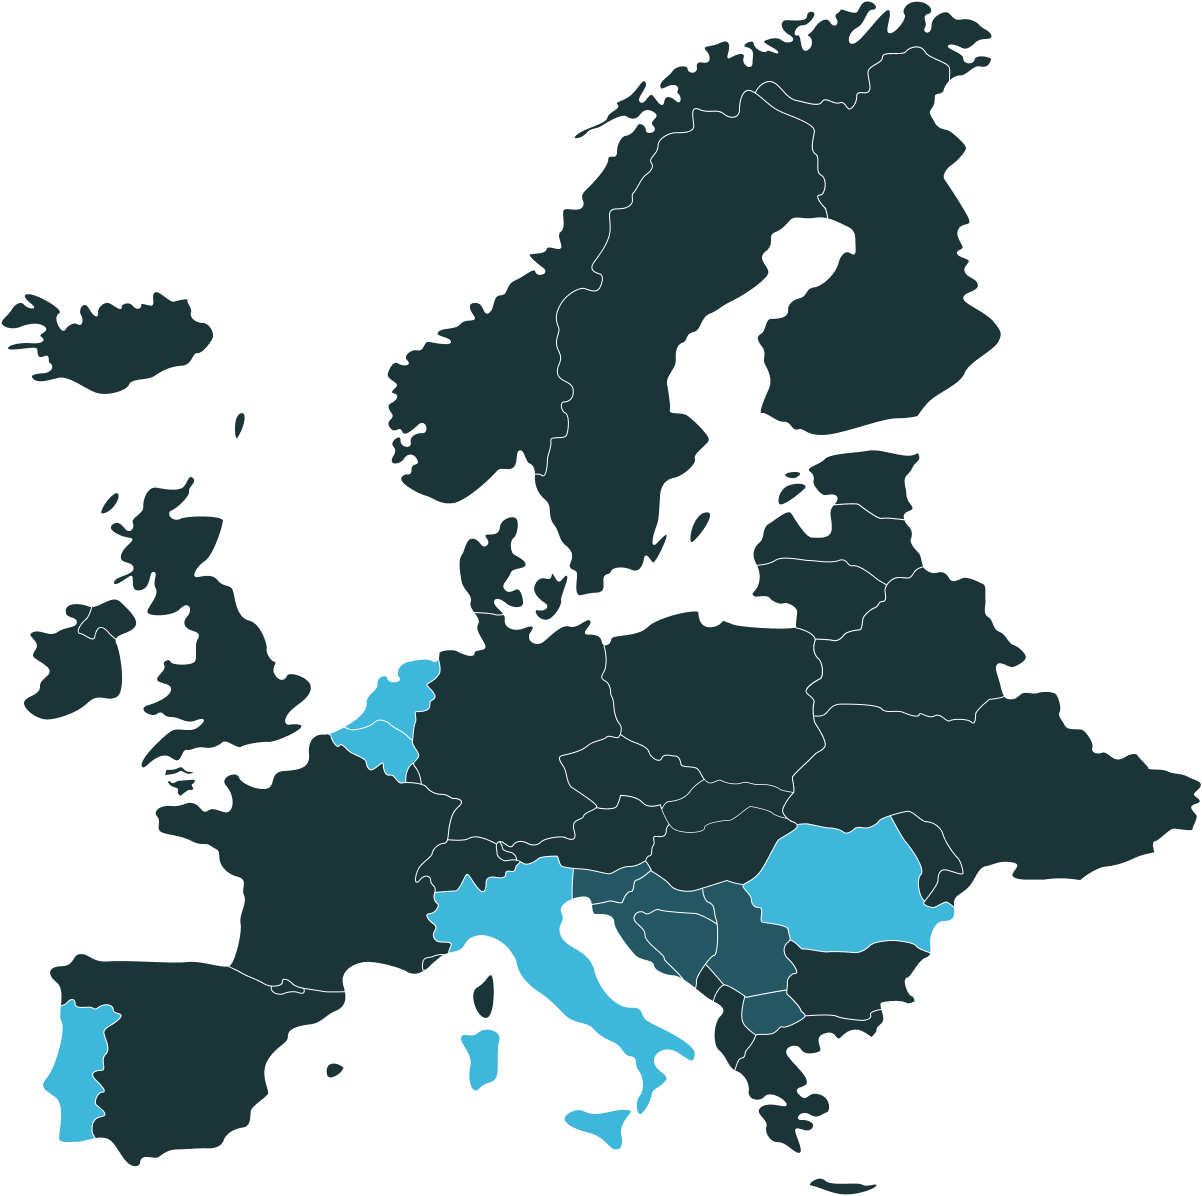 Inspire Europe locations